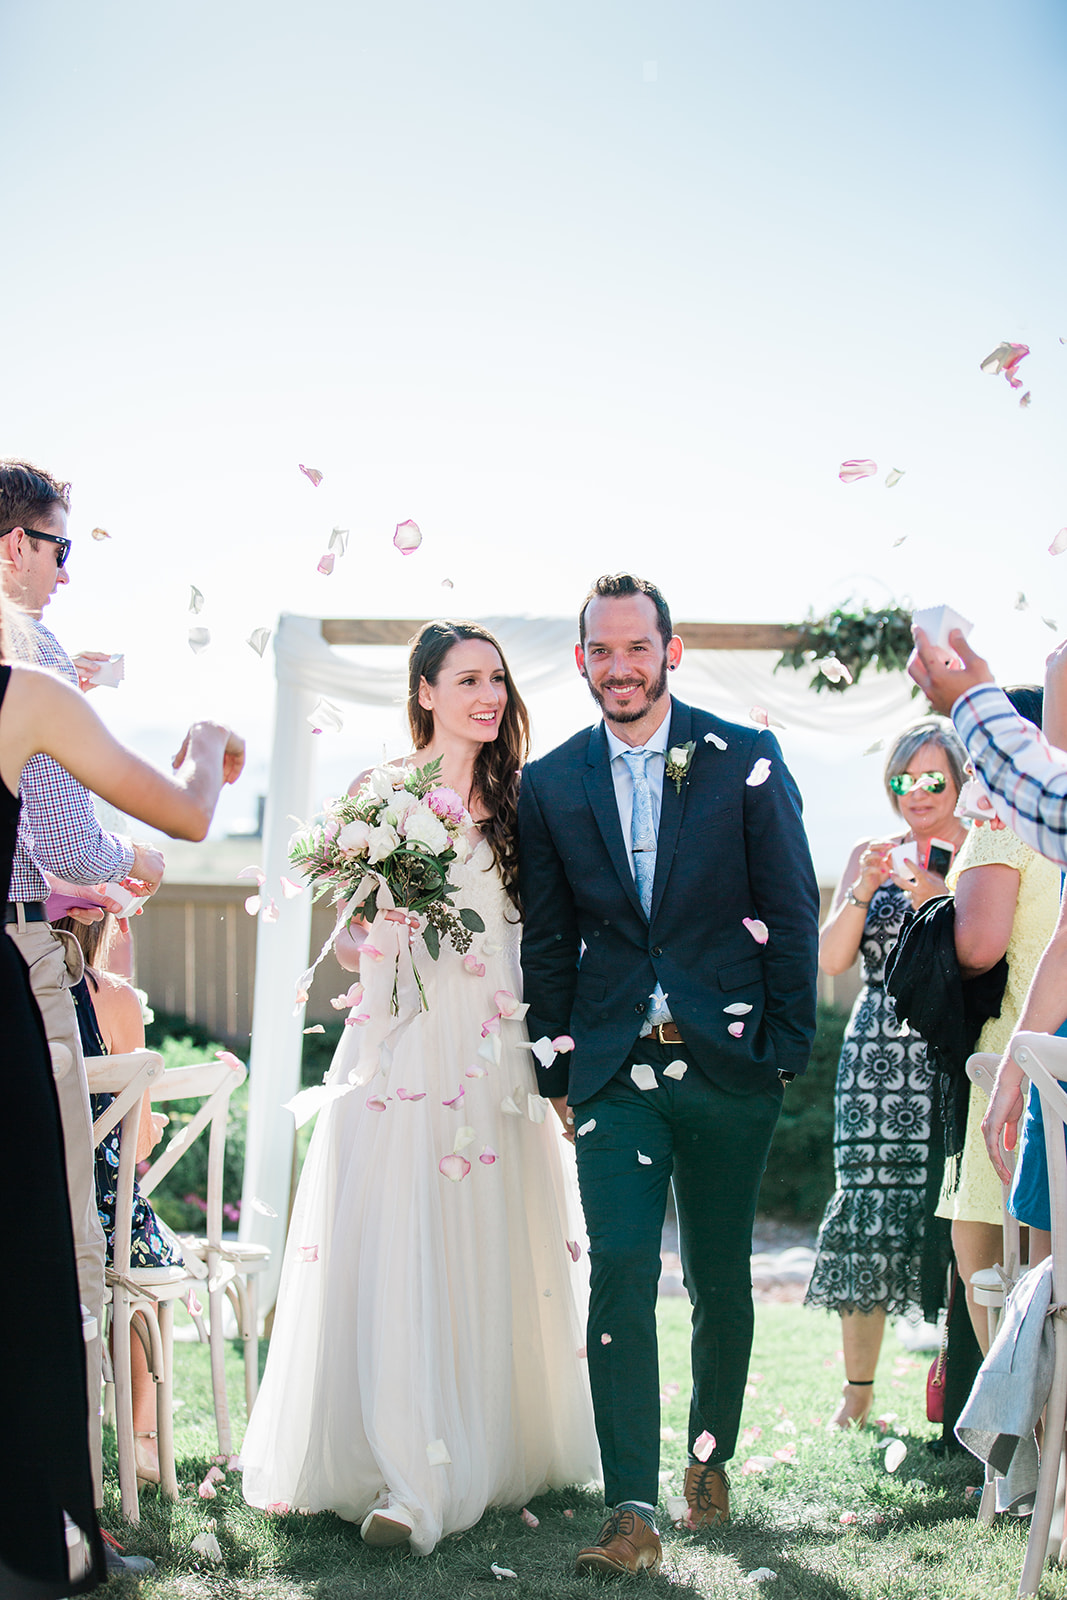 bride and groom celebrate getting married at backyard wedding